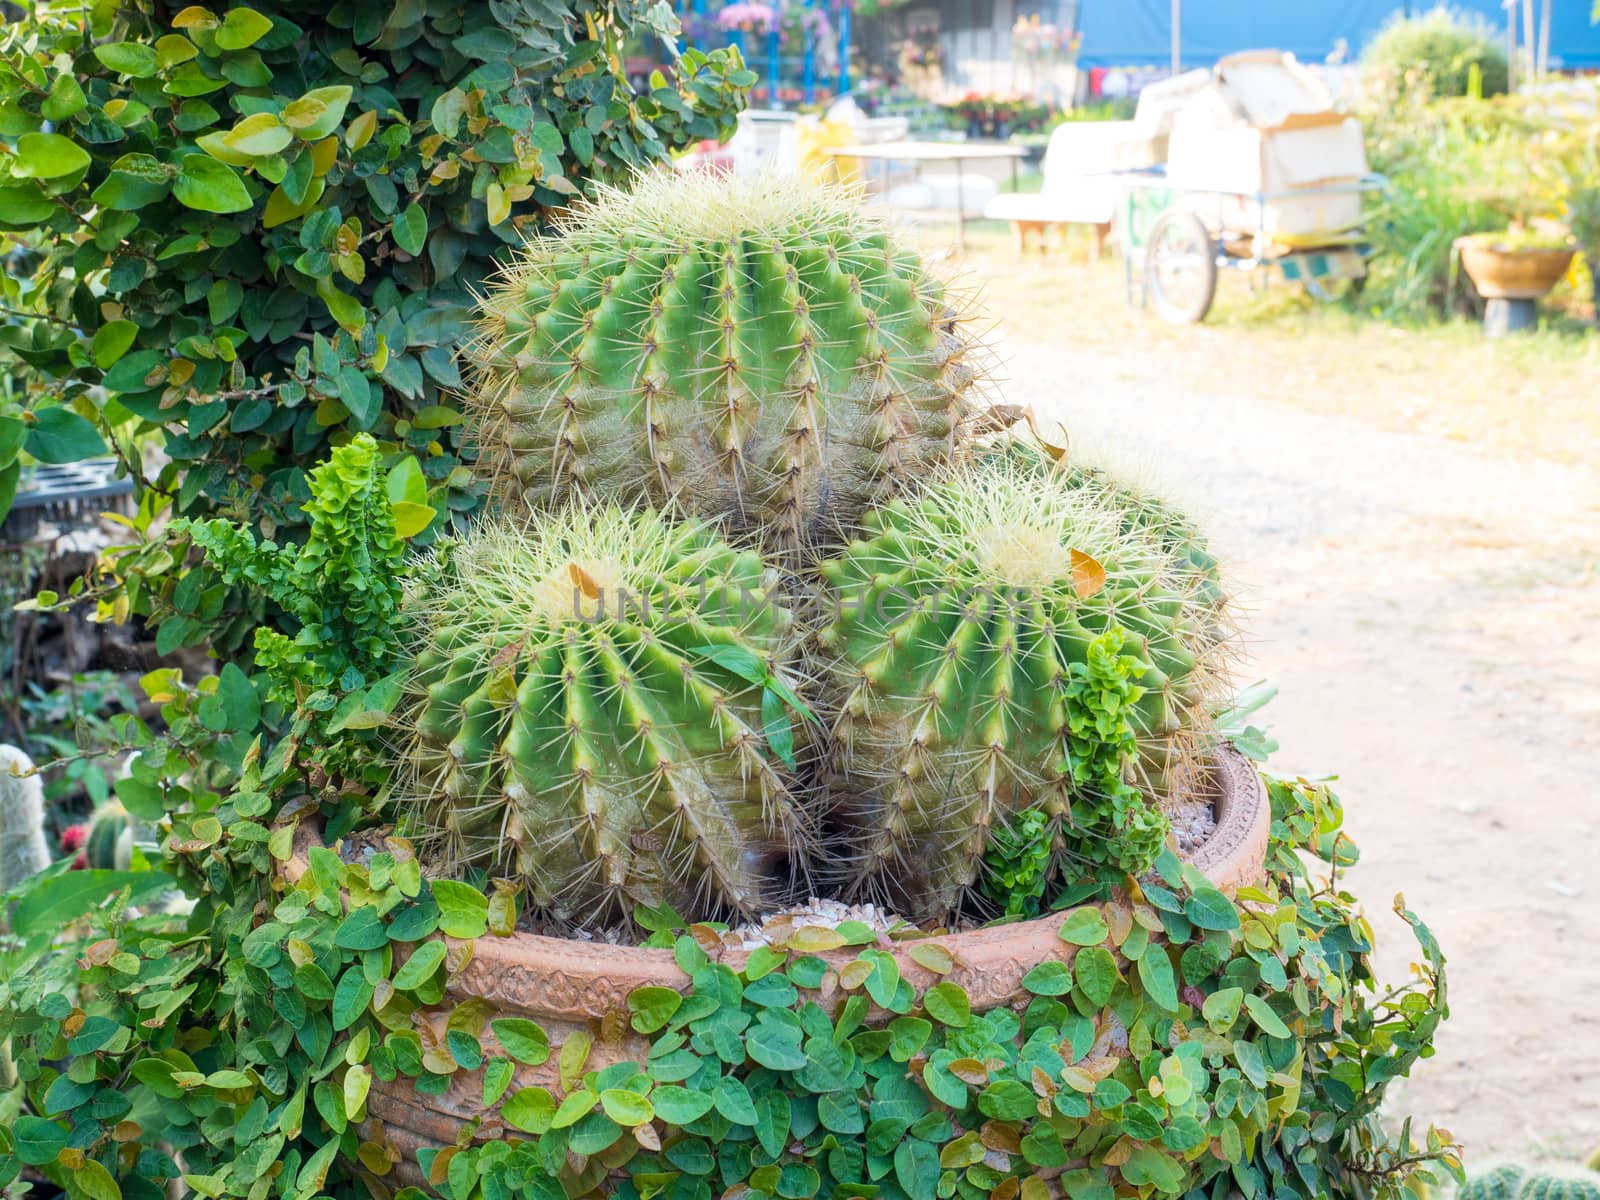 Cactus in a pot, select focus